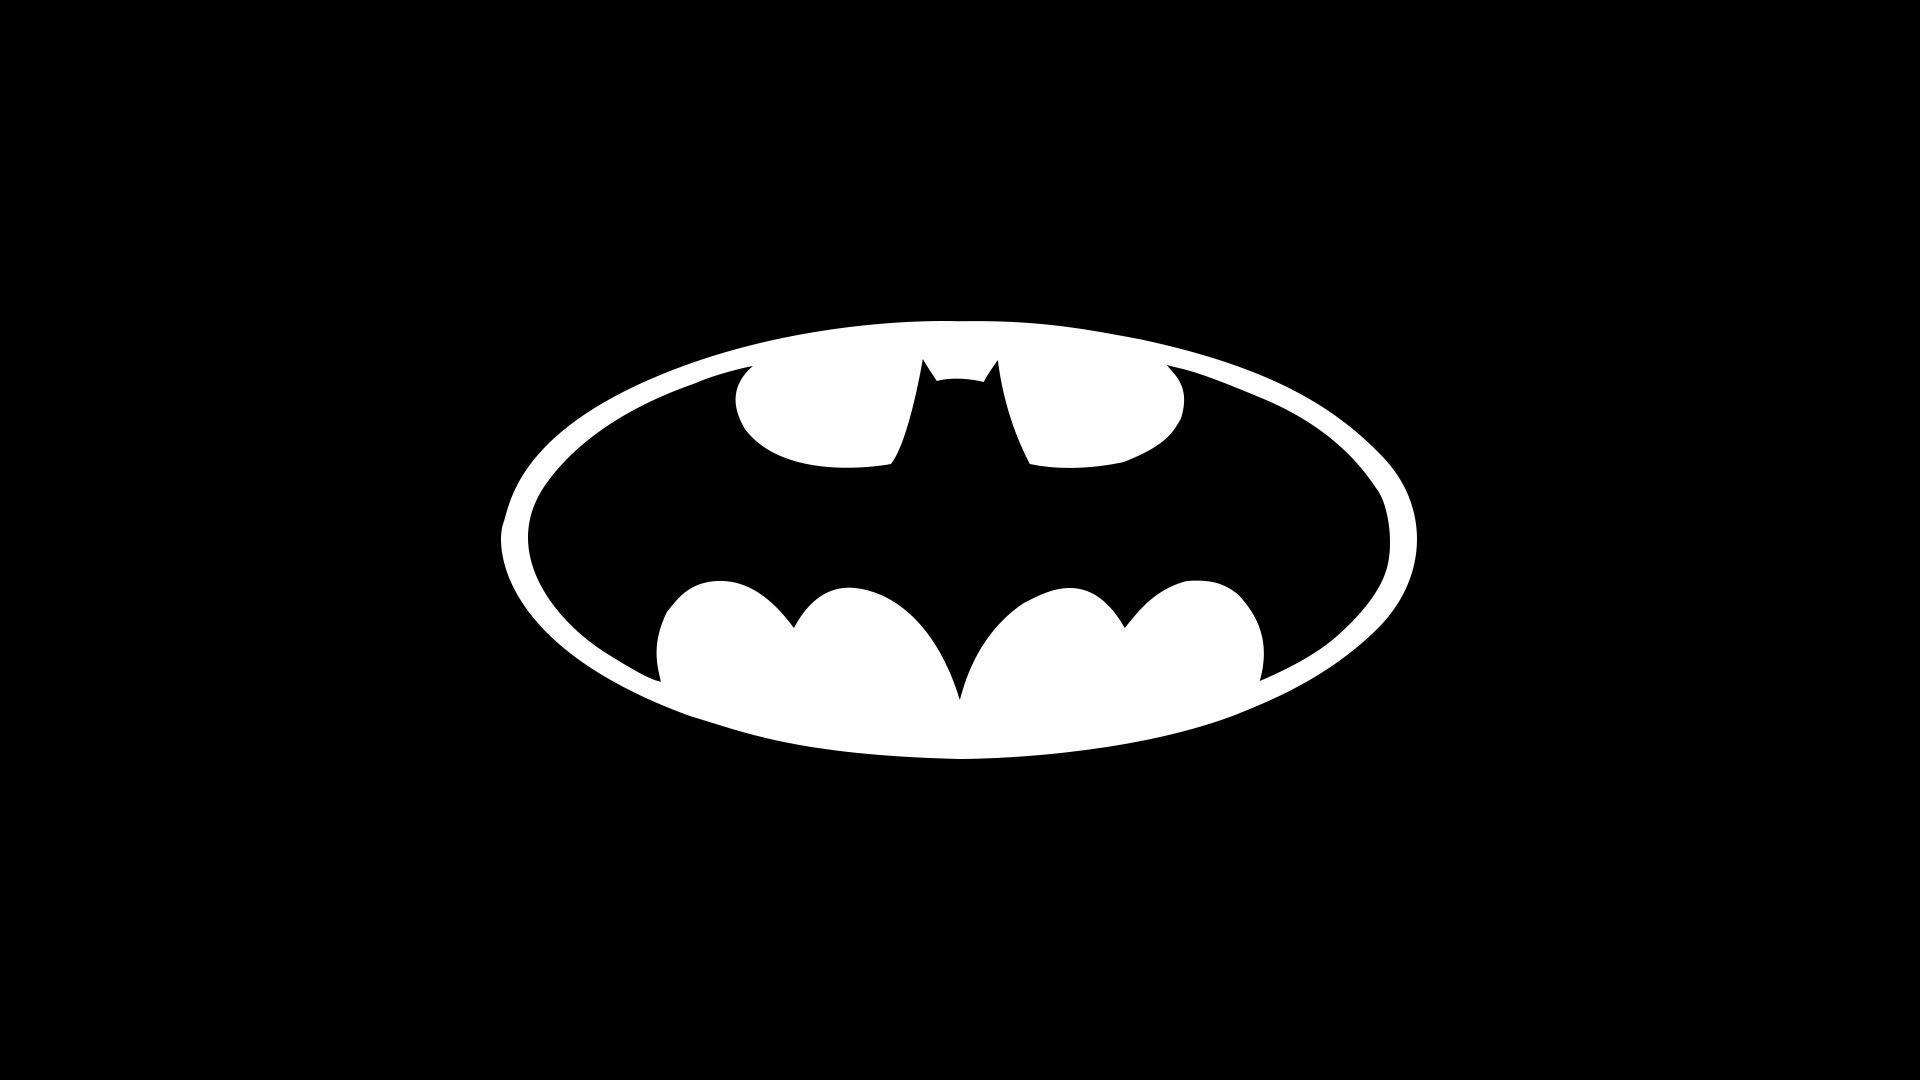 White Batman Logo - Simple Black And White Batman Logo Wallpaper | PaperPull